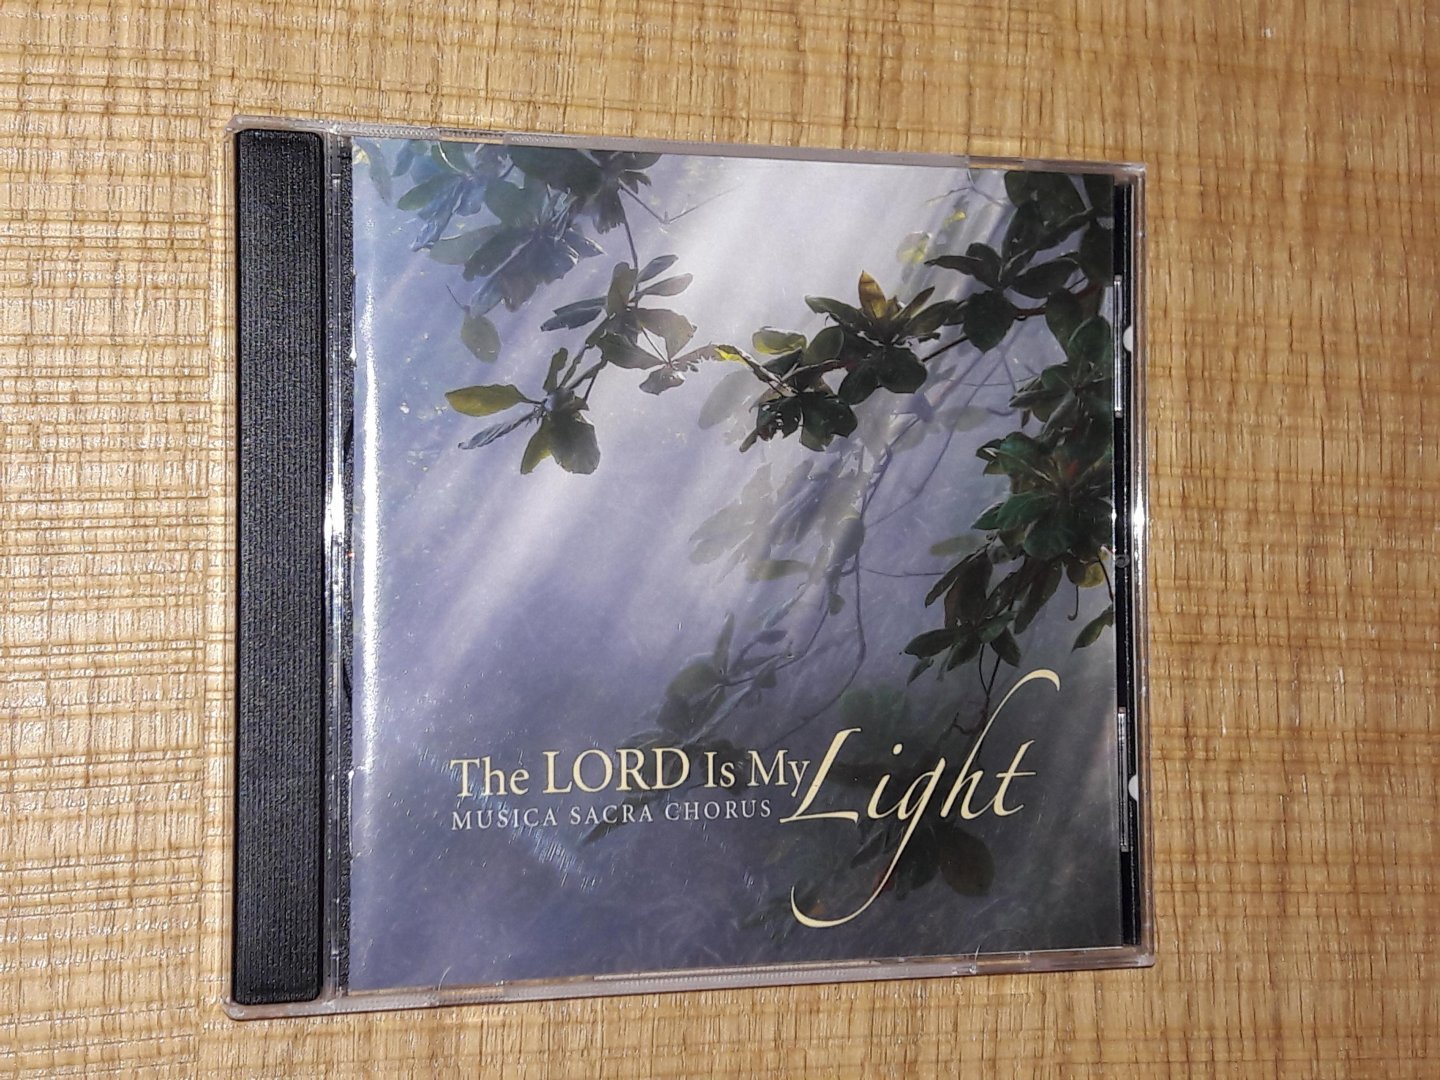 Musica Sacra Chorus - The Lord is my Light